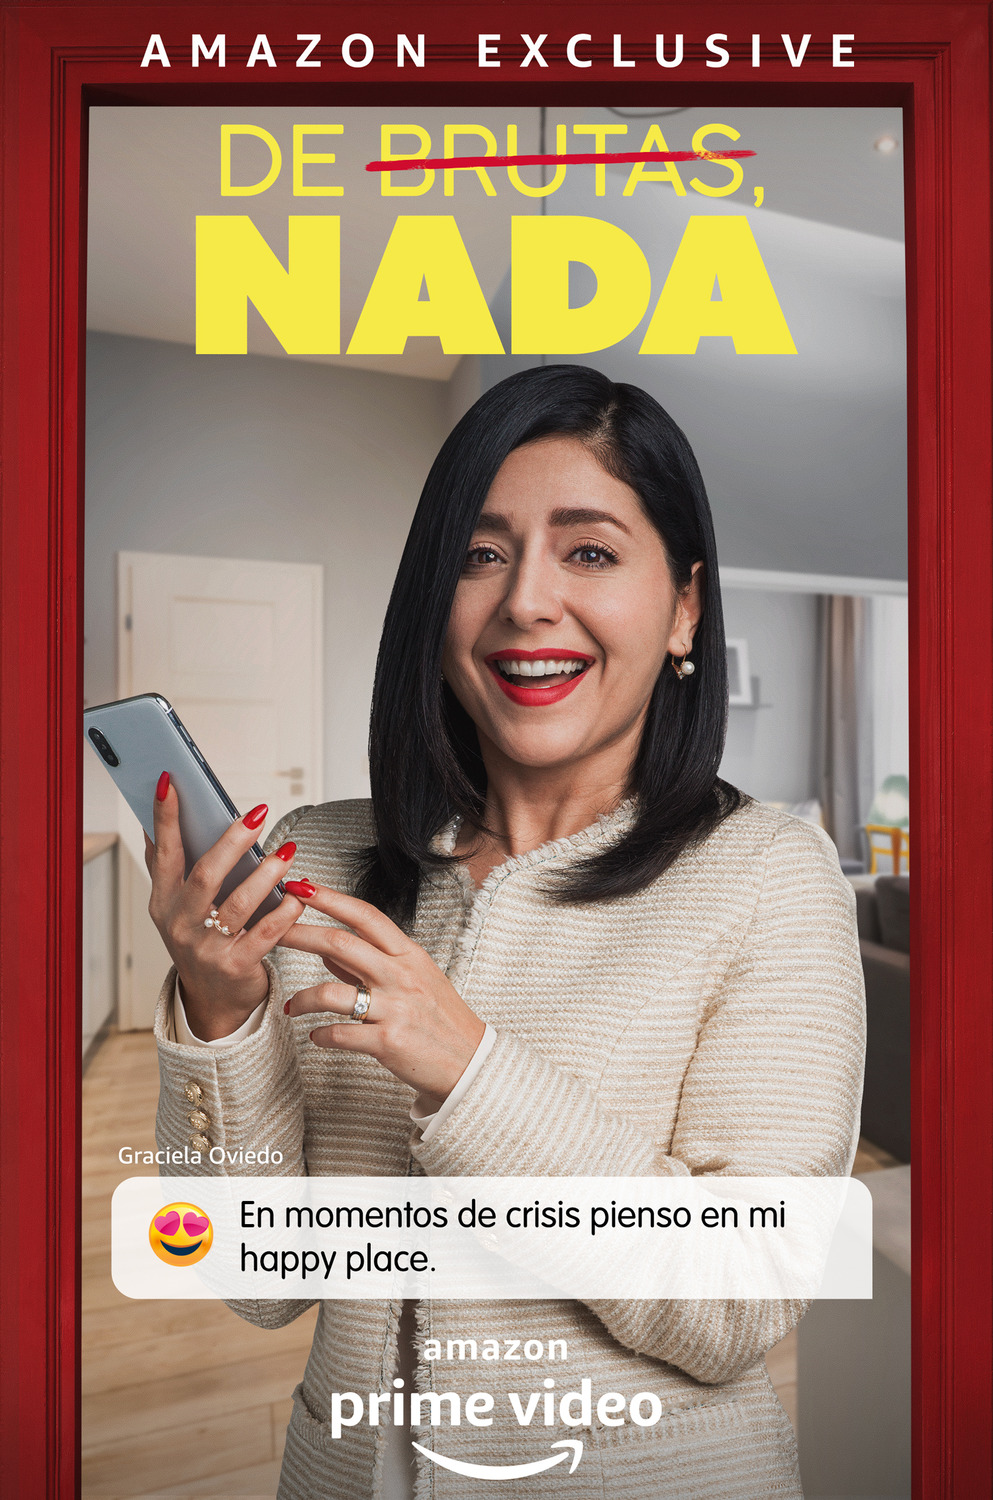 Extra Large TV Poster Image for De Brutas, Nada (#7 of 22)